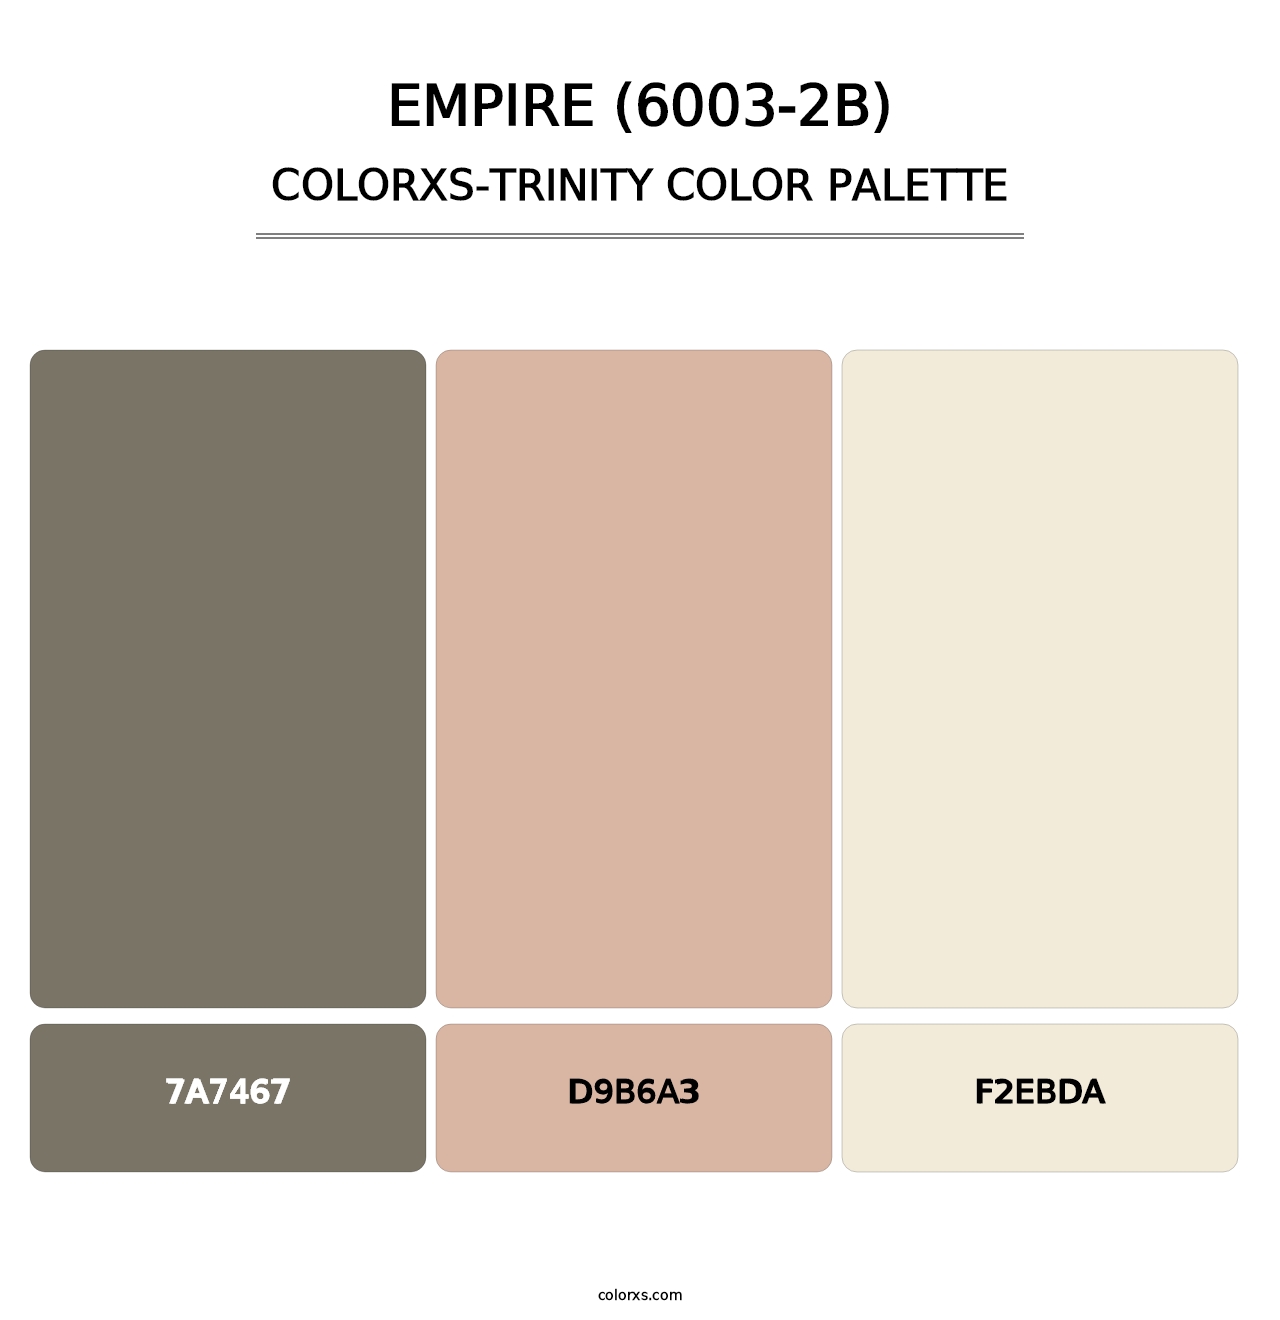 Empire (6003-2B) - Colorxs Trinity Palette